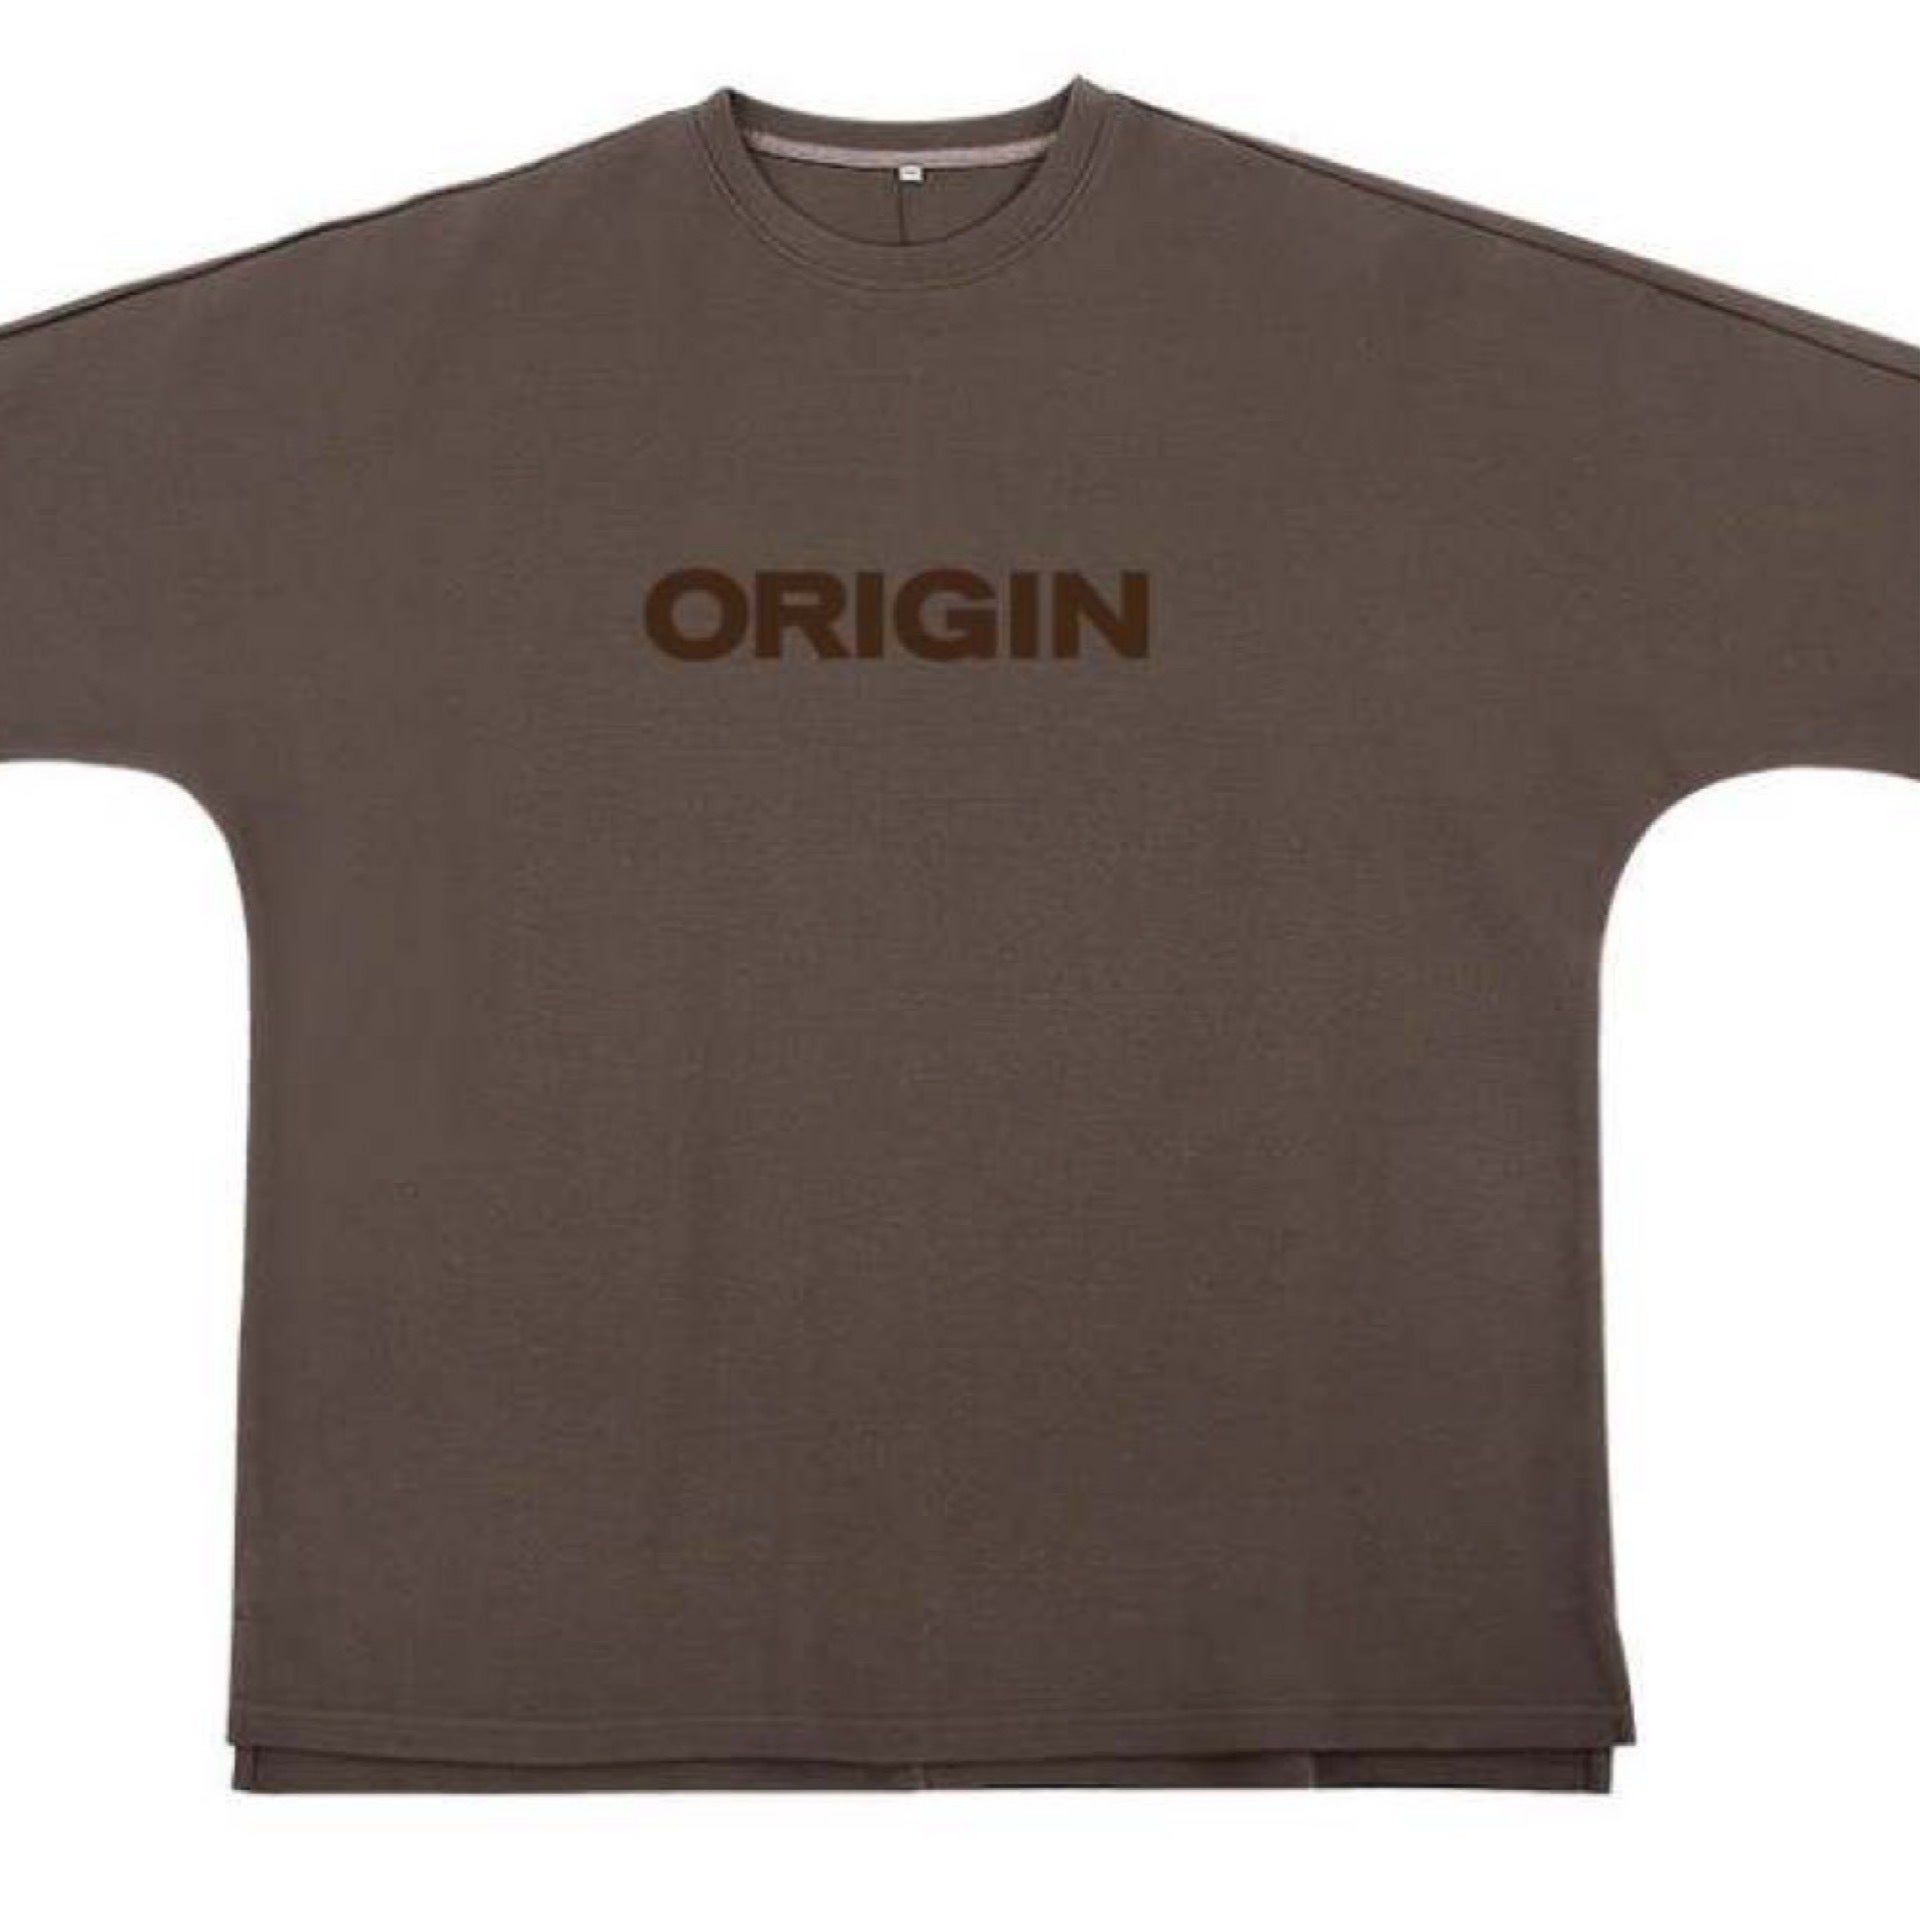 OG Brown Origin Tshirt Quadrado | Origin Hairstylers